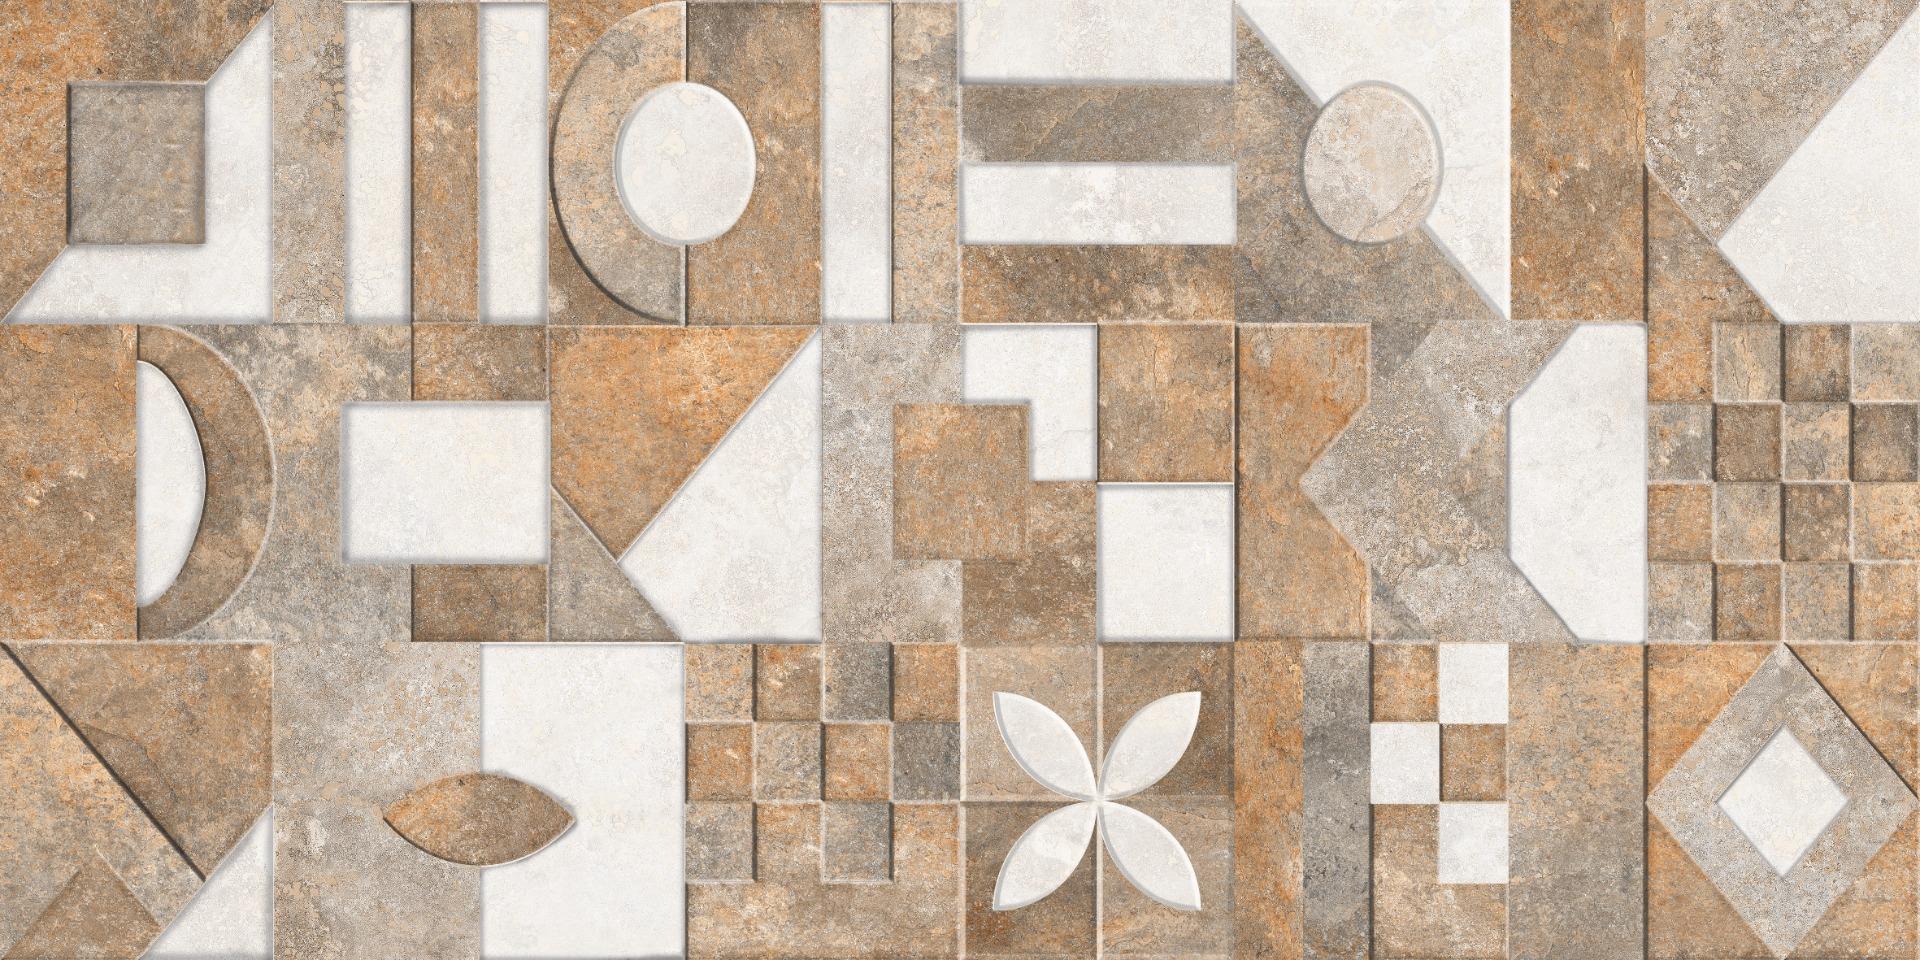 Multi Colour Tiles for Bathroom Tiles, Living Room Tiles, Bedroom Tiles, Accent Tiles, Hospital Tiles, High Traffic Tiles, Bar/Restaurant, Commercial/Office, Outdoor Area